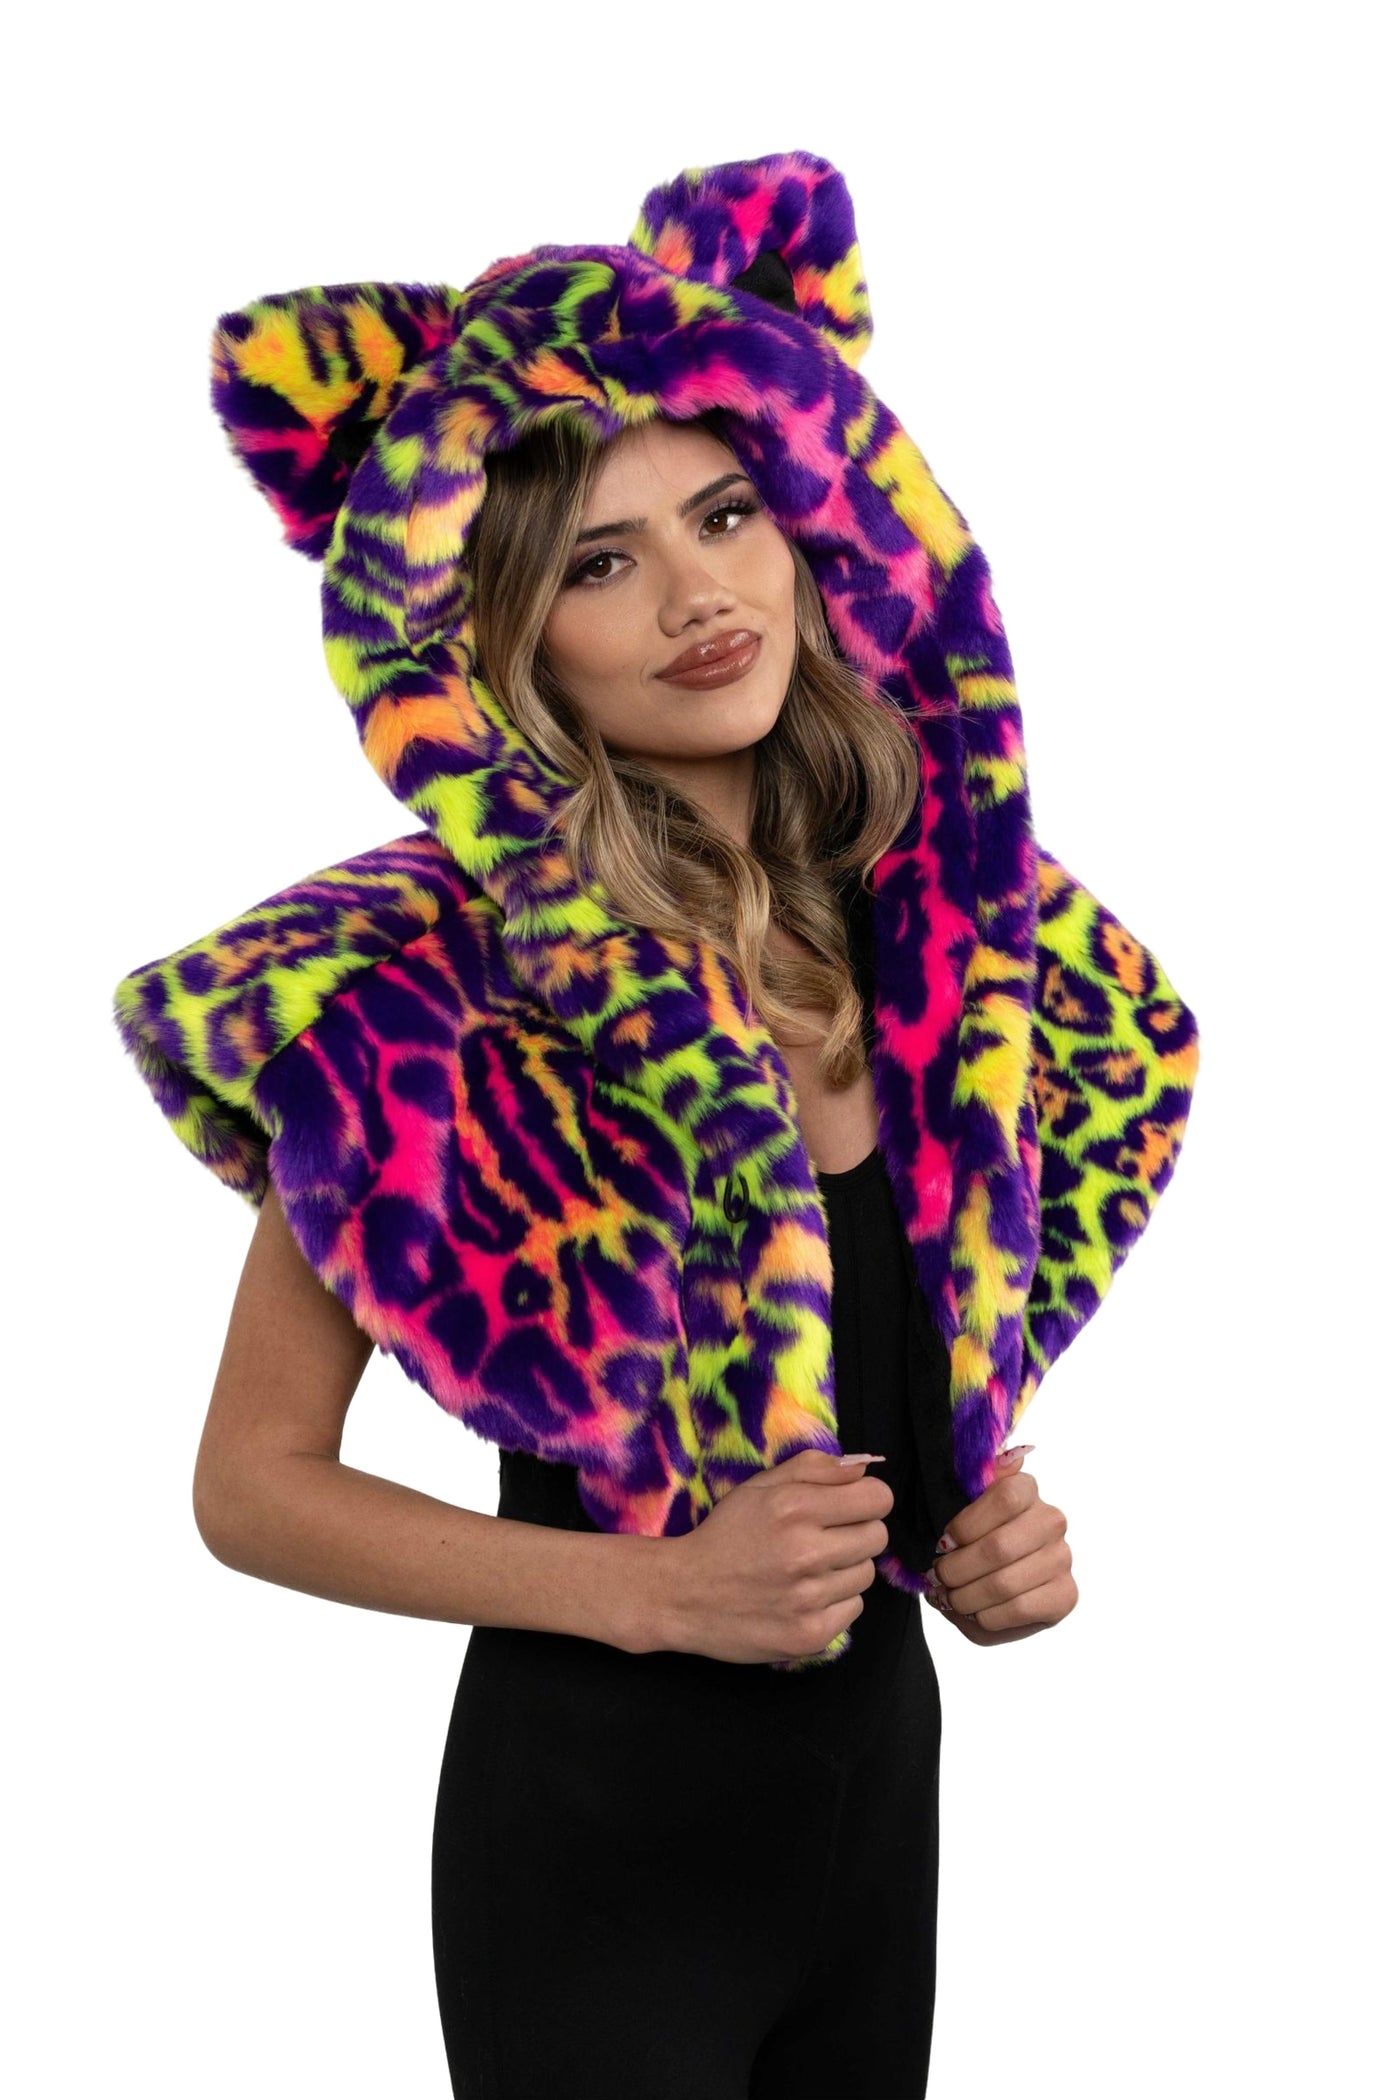 Kitty Hood in "Neon Cheetah" STOCK